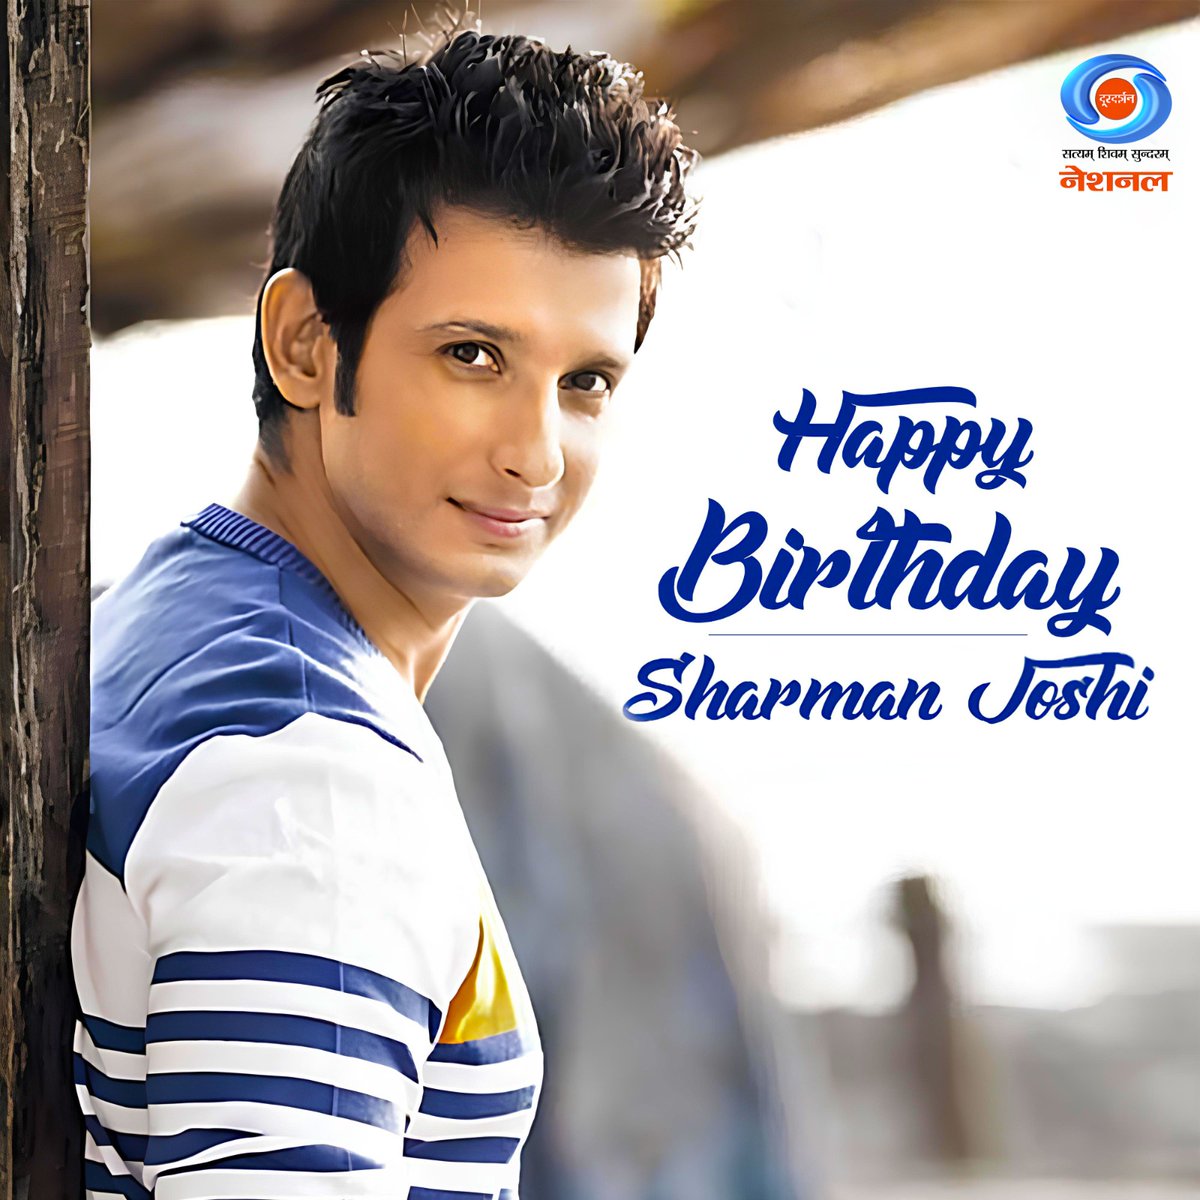 Happy Birthday, Sharman Joshi!  From comedy to drama, you've entertained us all!

#HappyBirthday | #SharmanJoshi | #HappyBirthdaySharmanJoshi